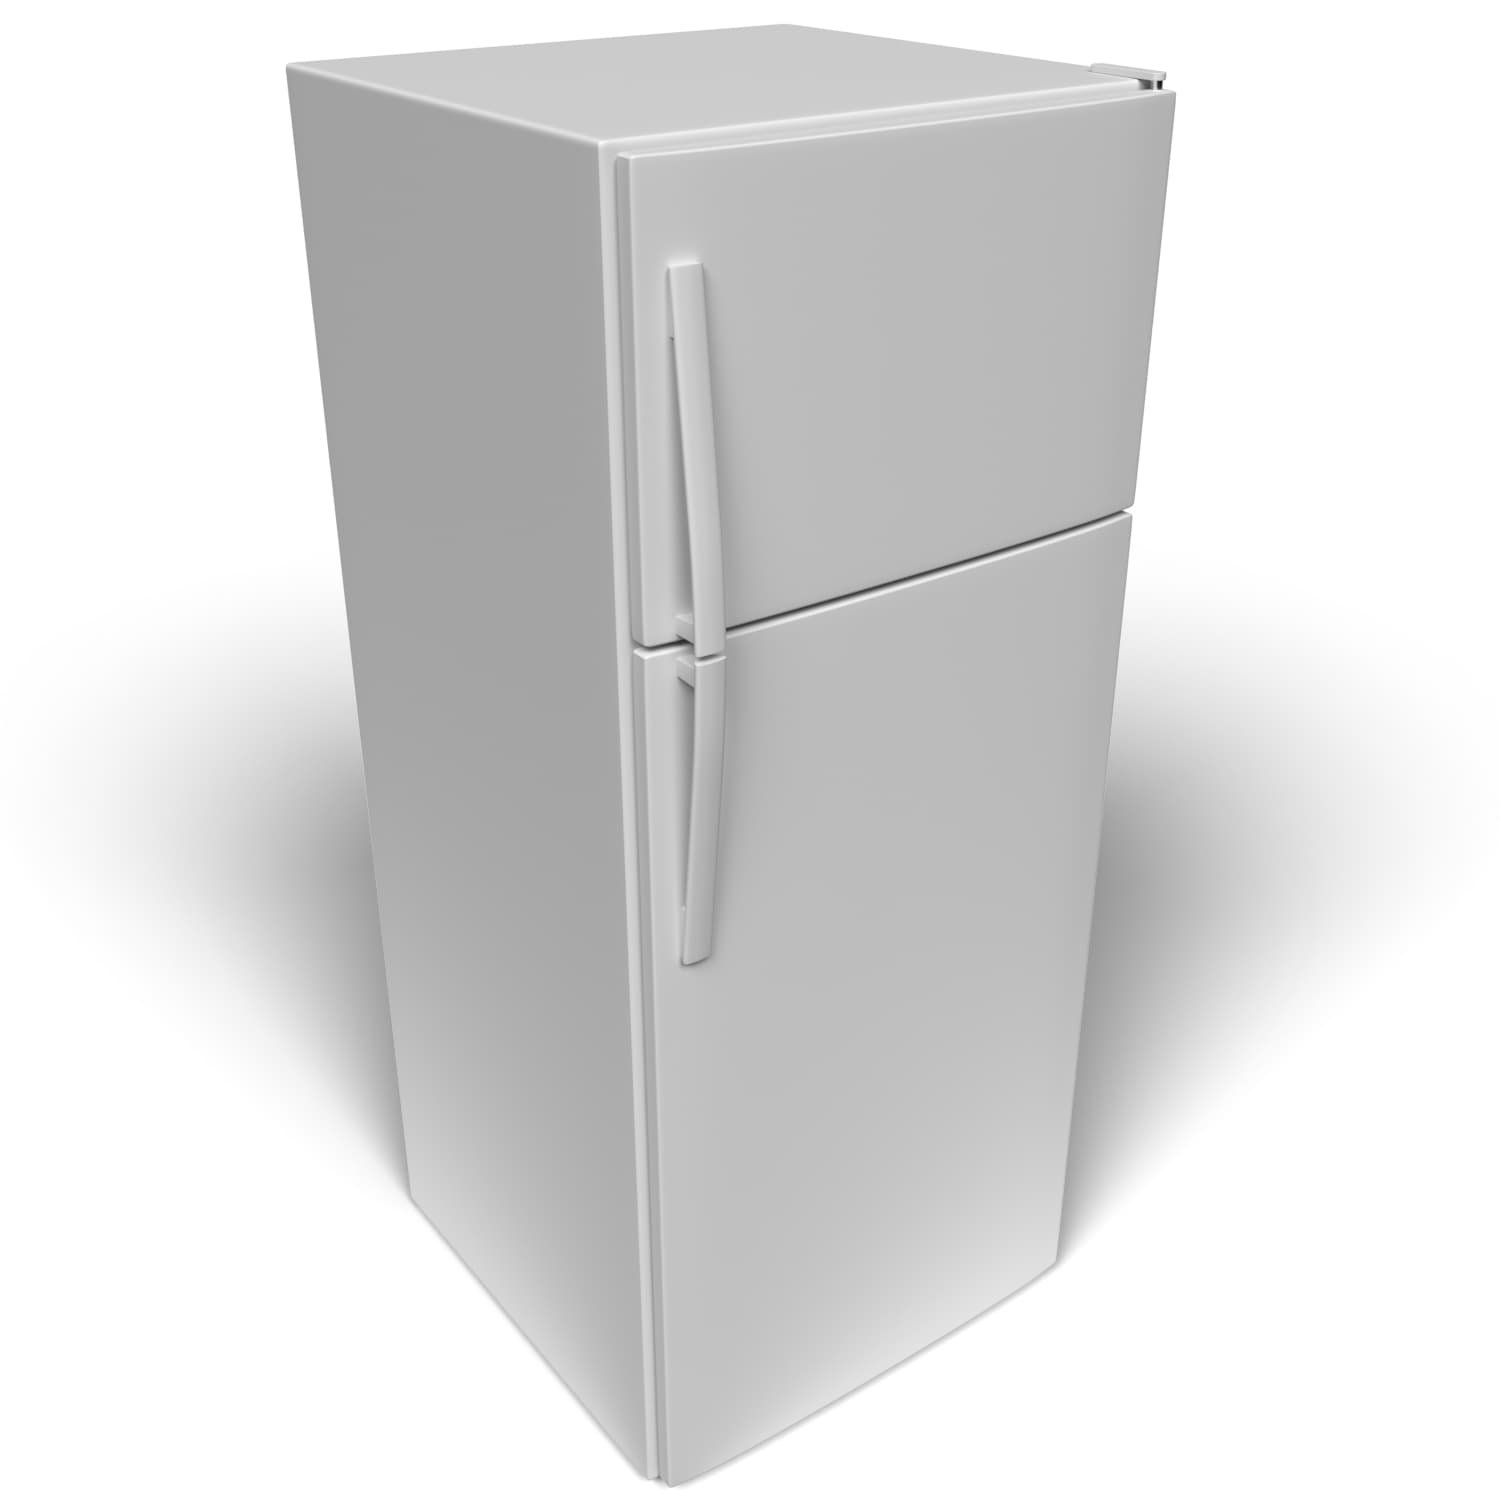 Solid White Refrigerator Wrap